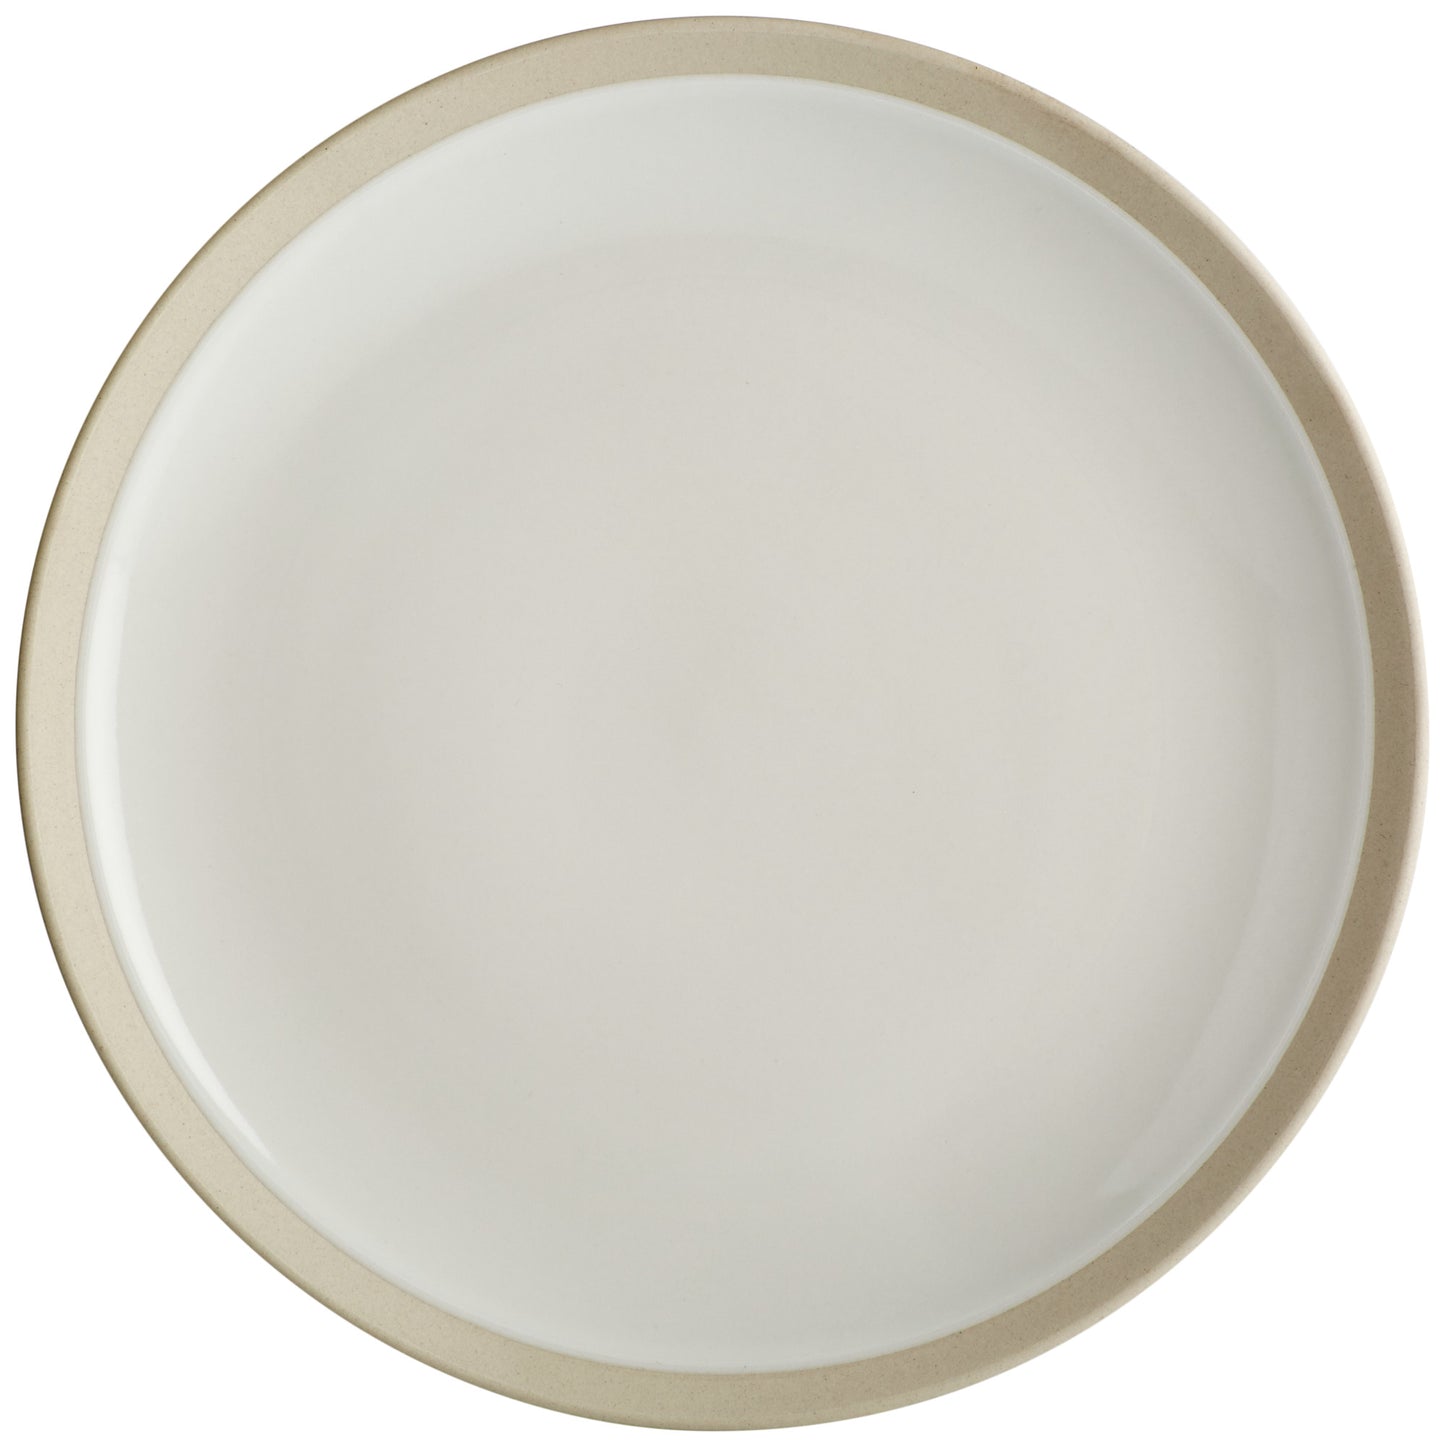 Fairmont & Main Dinner Plate - Elements Bone